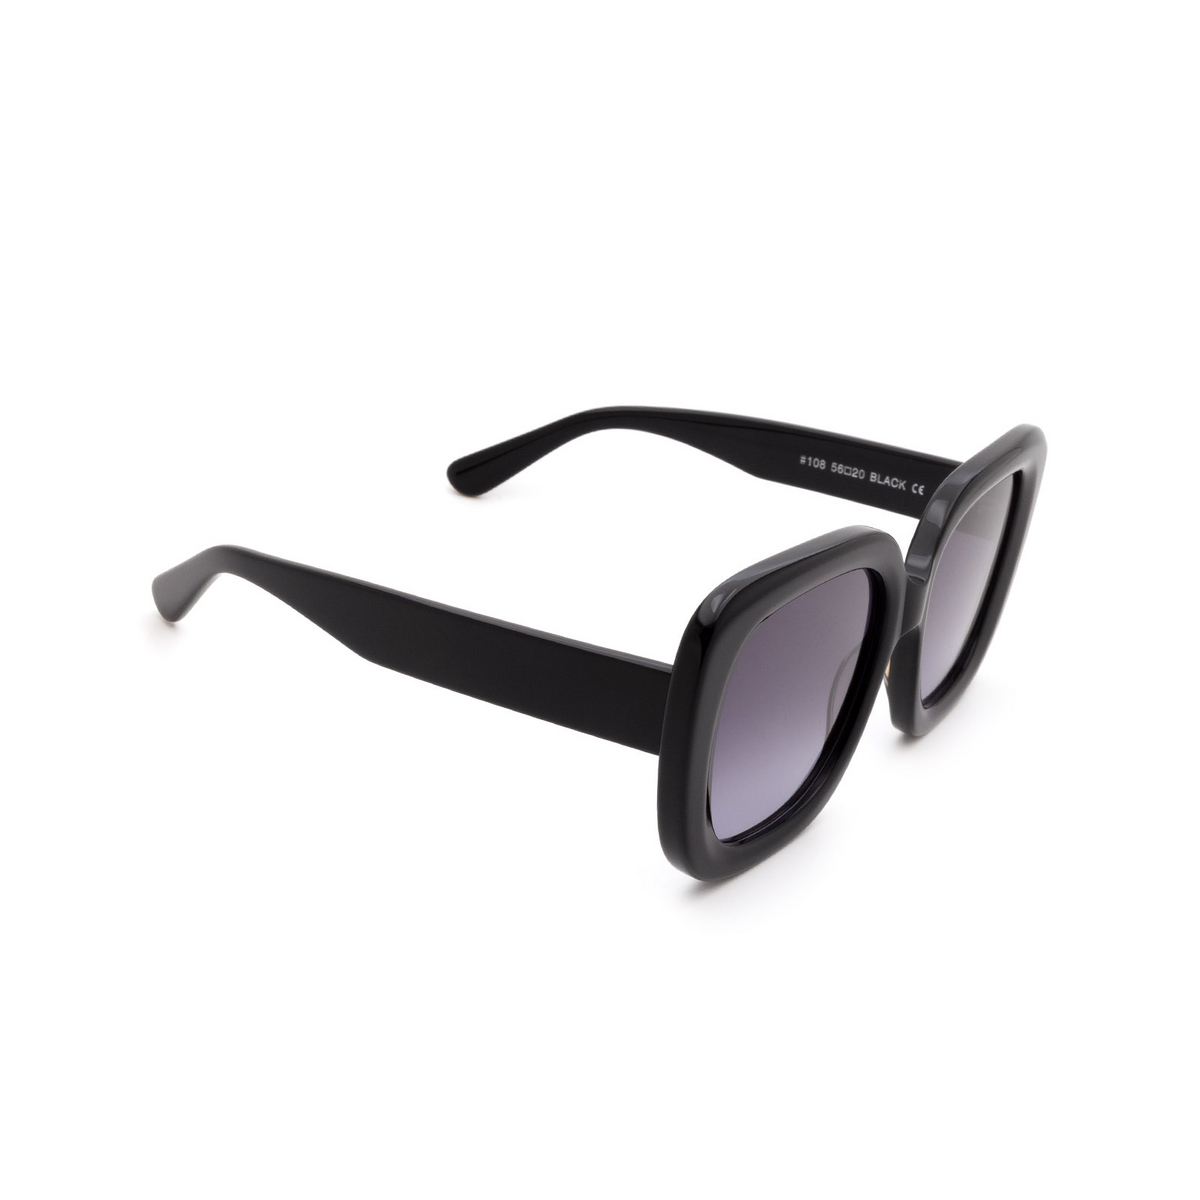 Chimi® Square Sunglasses: #108 color Black - three-quarters view.